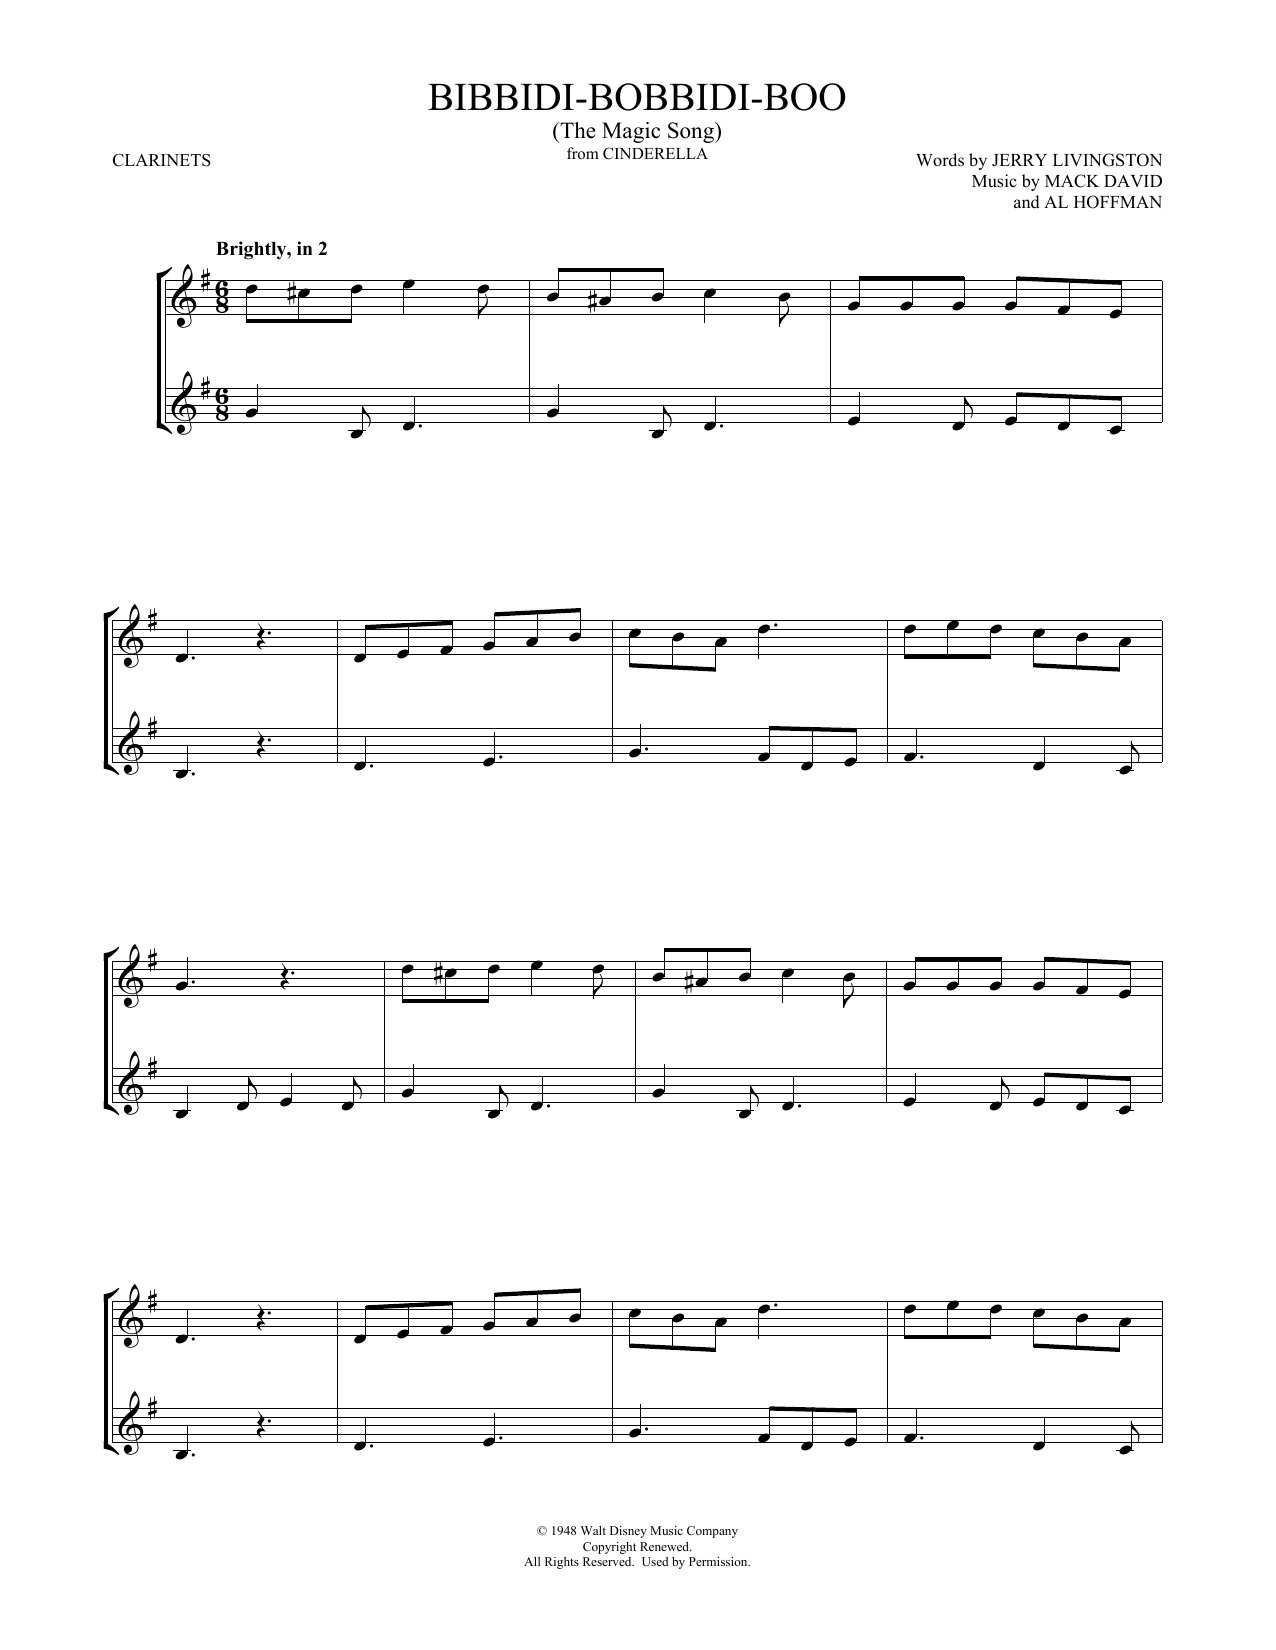 Verna Felton Bibbidi-Bobbidi-Boo (The Magic Song) (from Cinderella) Sheet Music Notes & Chords for Flute Duet - Download or Print PDF